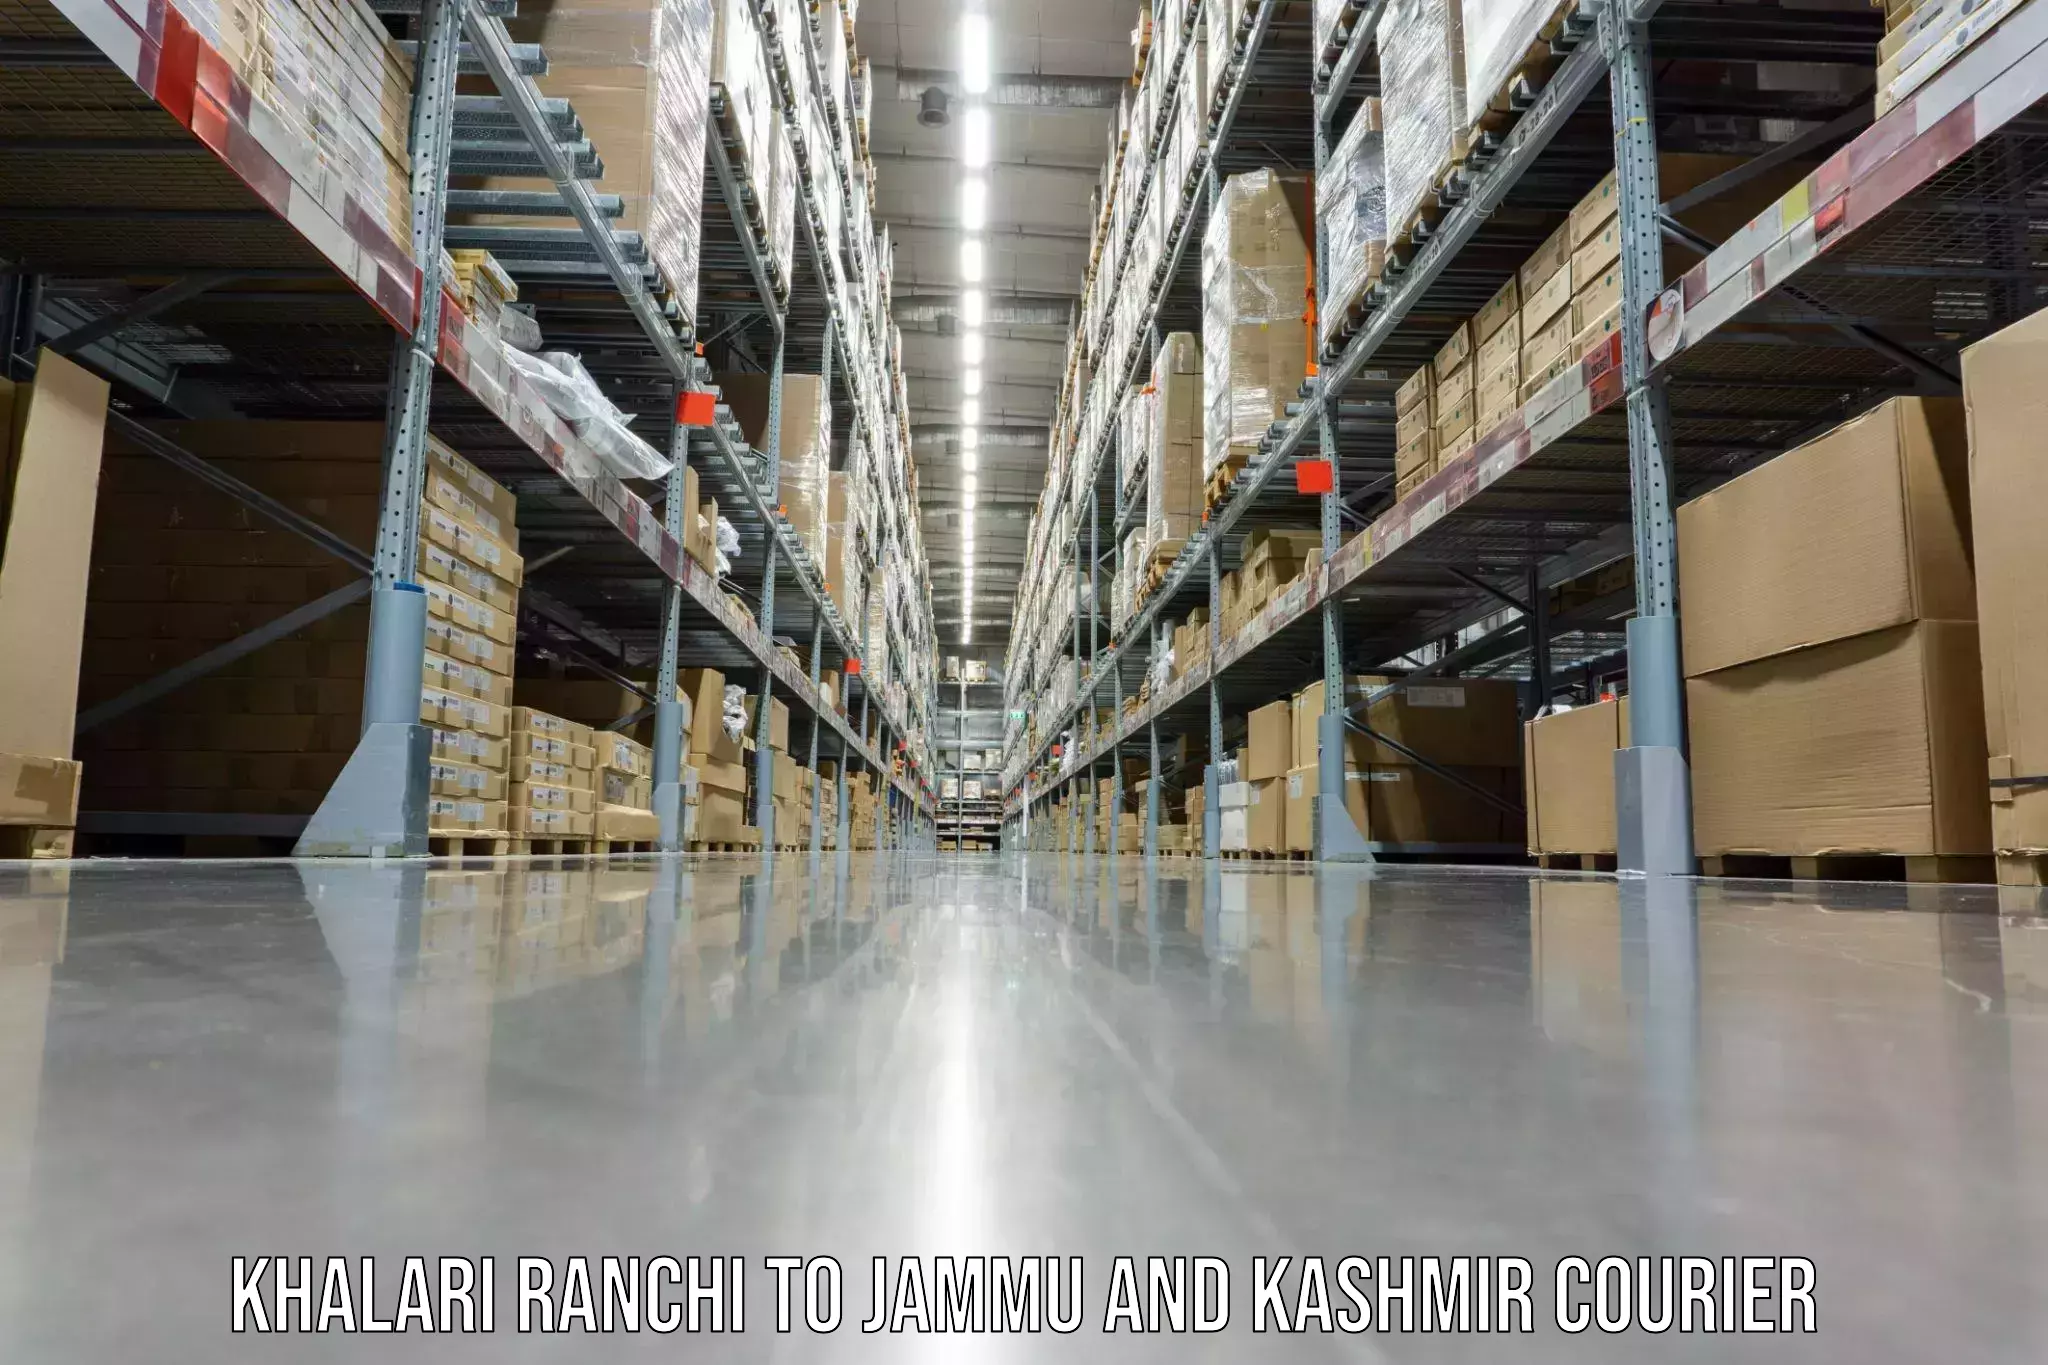 Professional moving company Khalari Ranchi to Baramulla